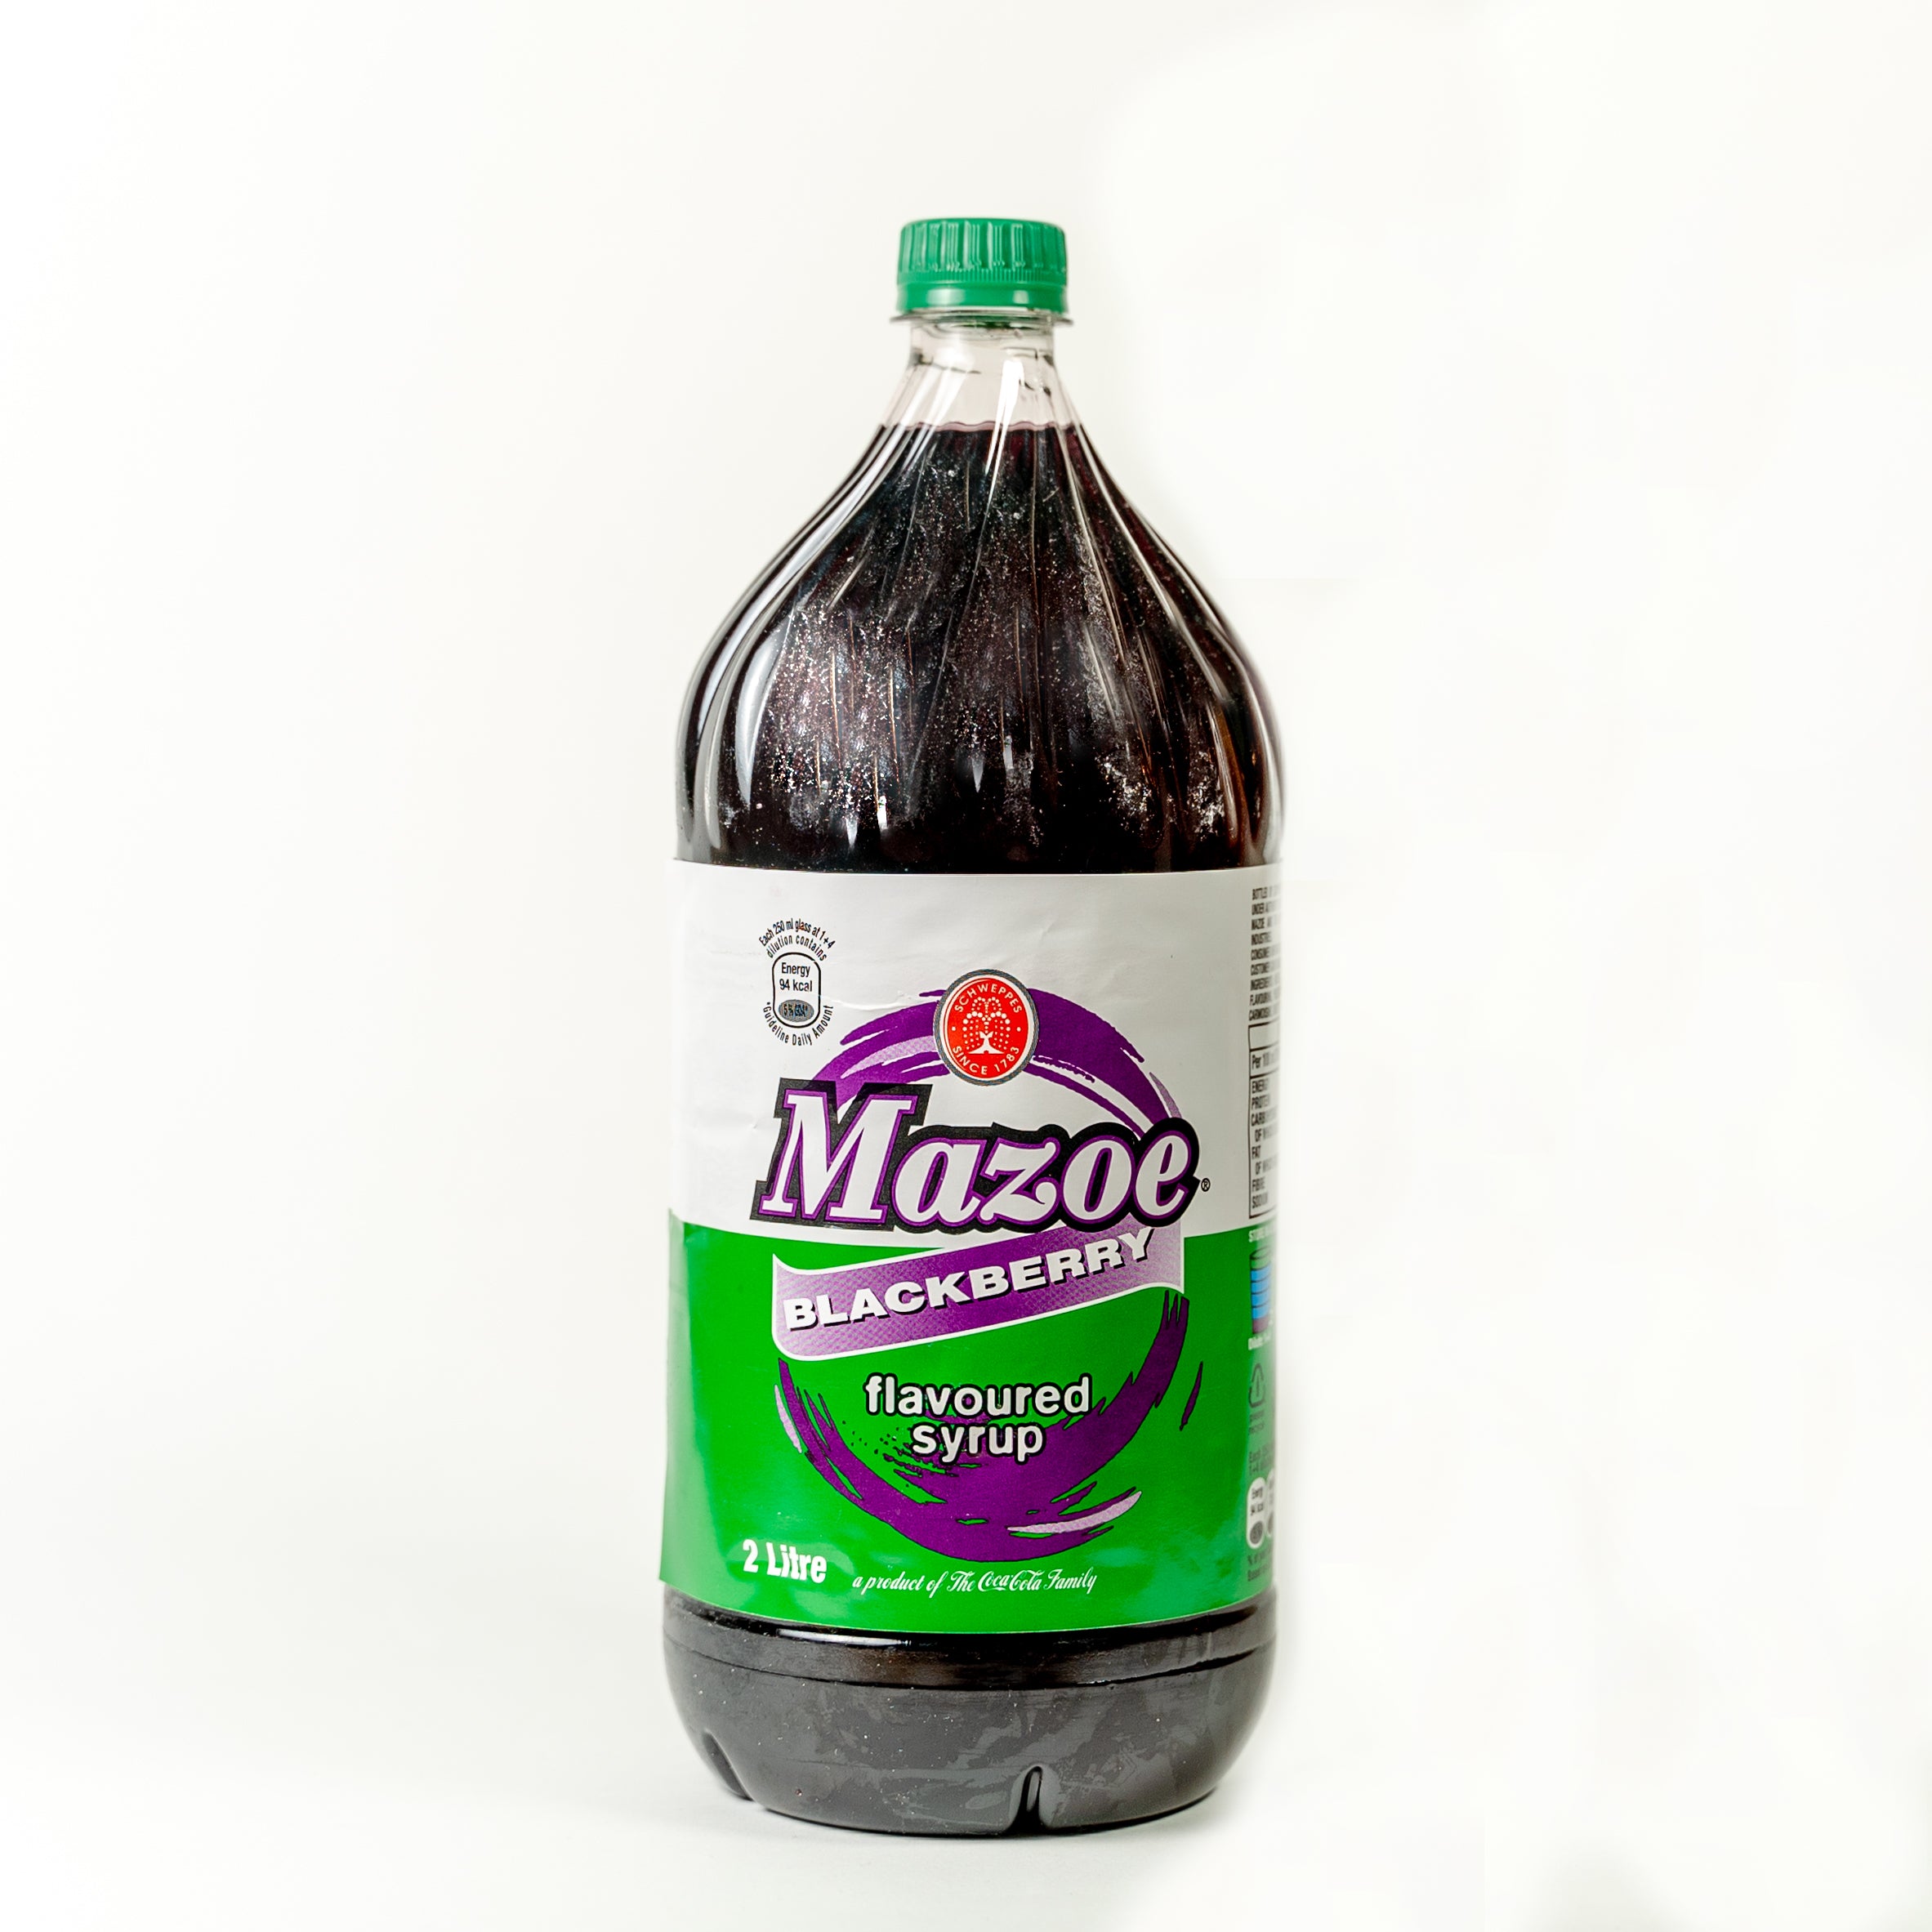 Mazoe Blackberry Flavoured Syrup (2 Litre)